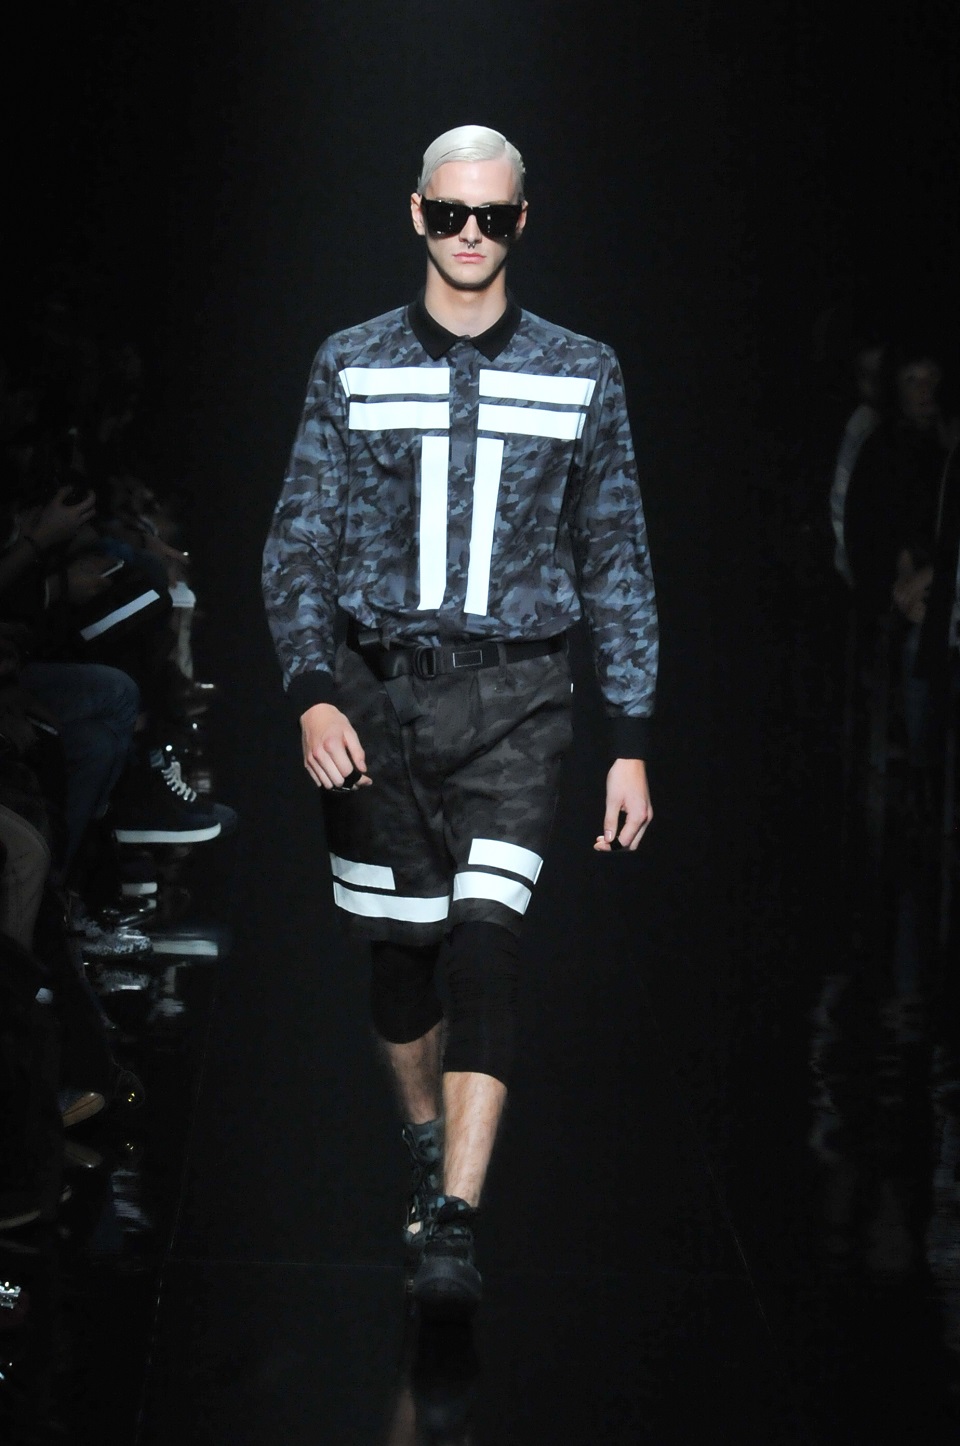 The future is men’s fashion, says Italian talent Pompilio | GMA News Online